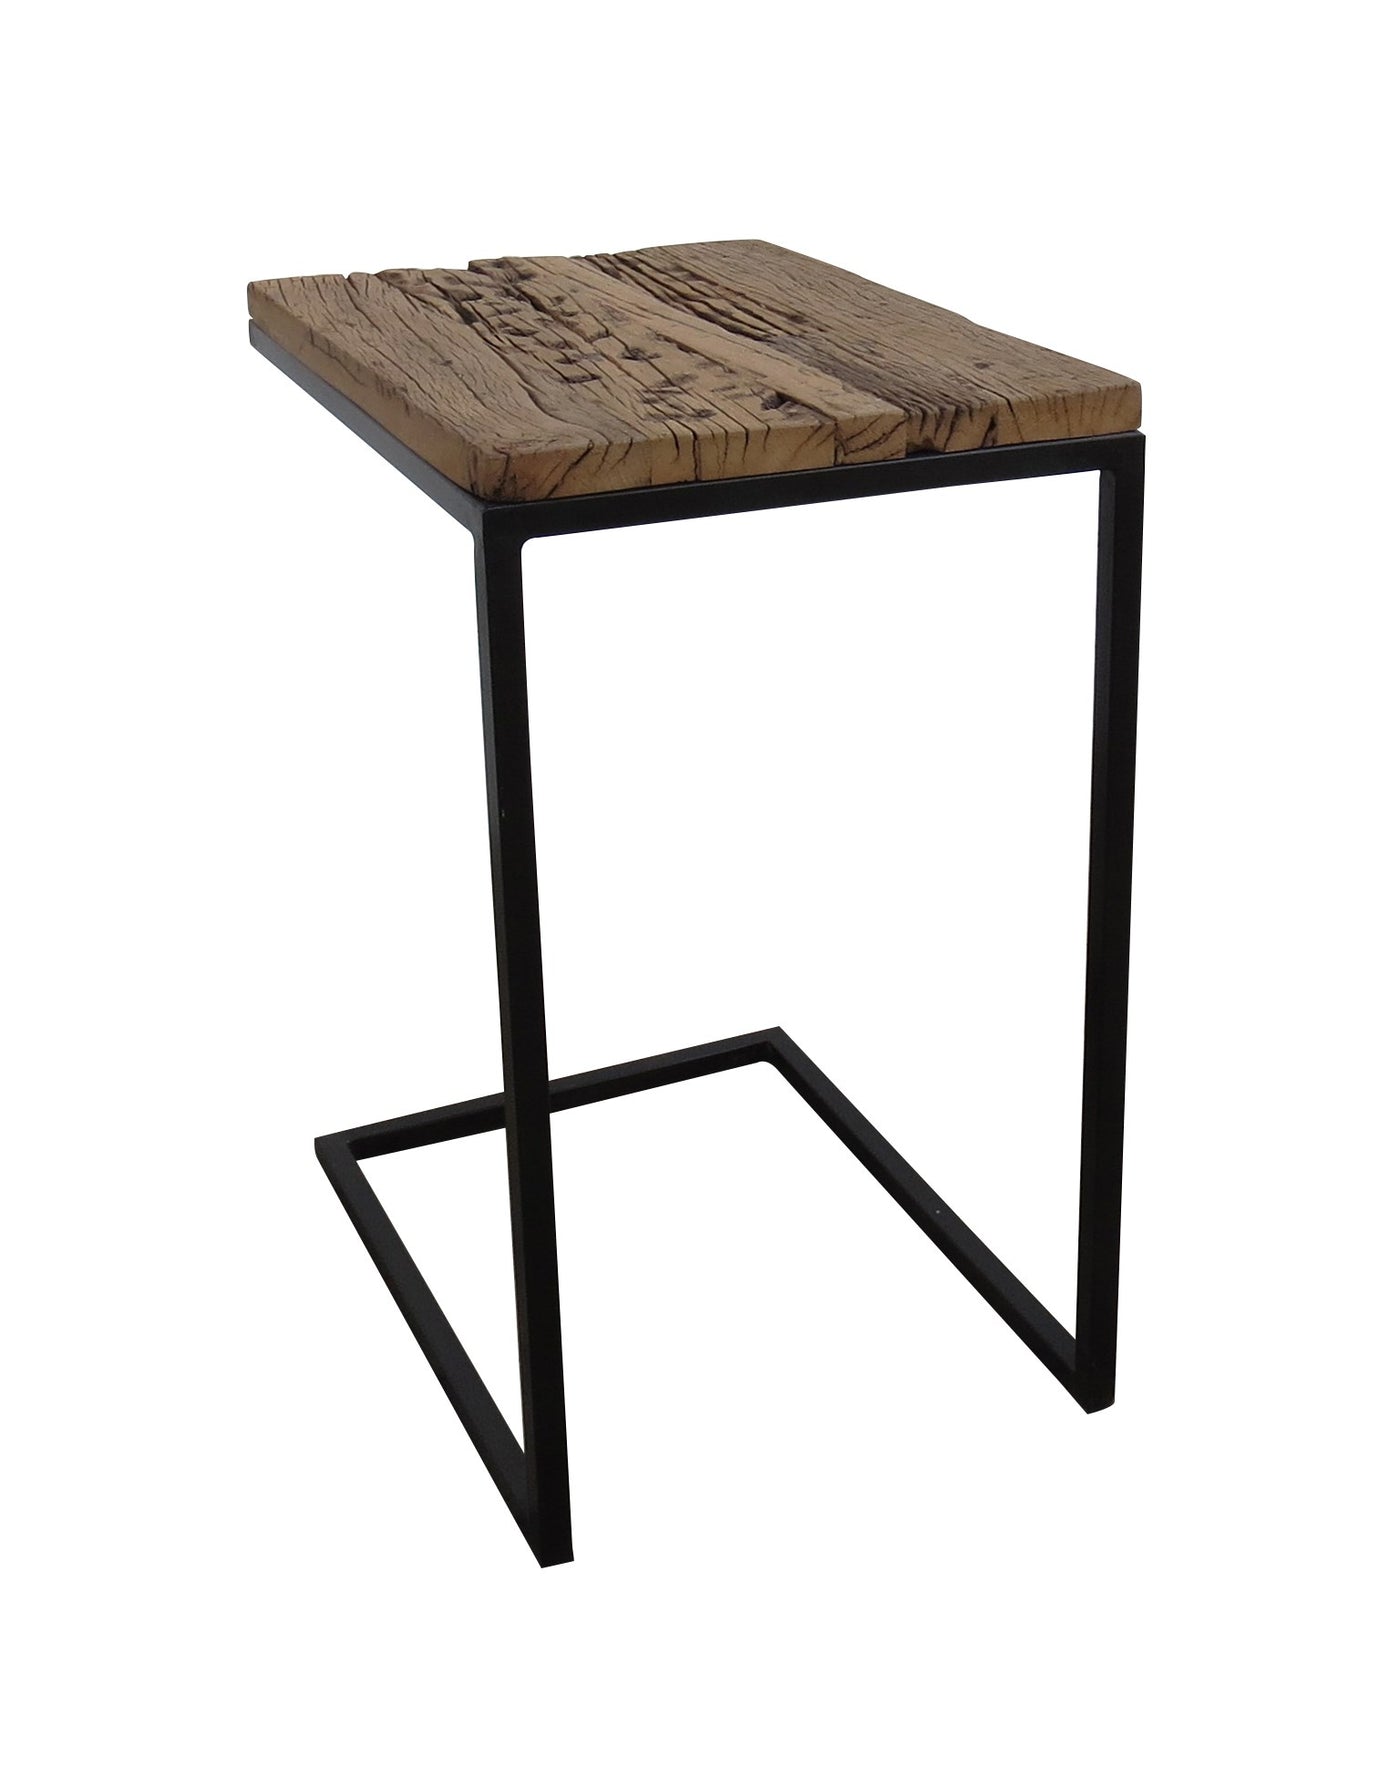 Jill Sofa Side Table - Drift Wood